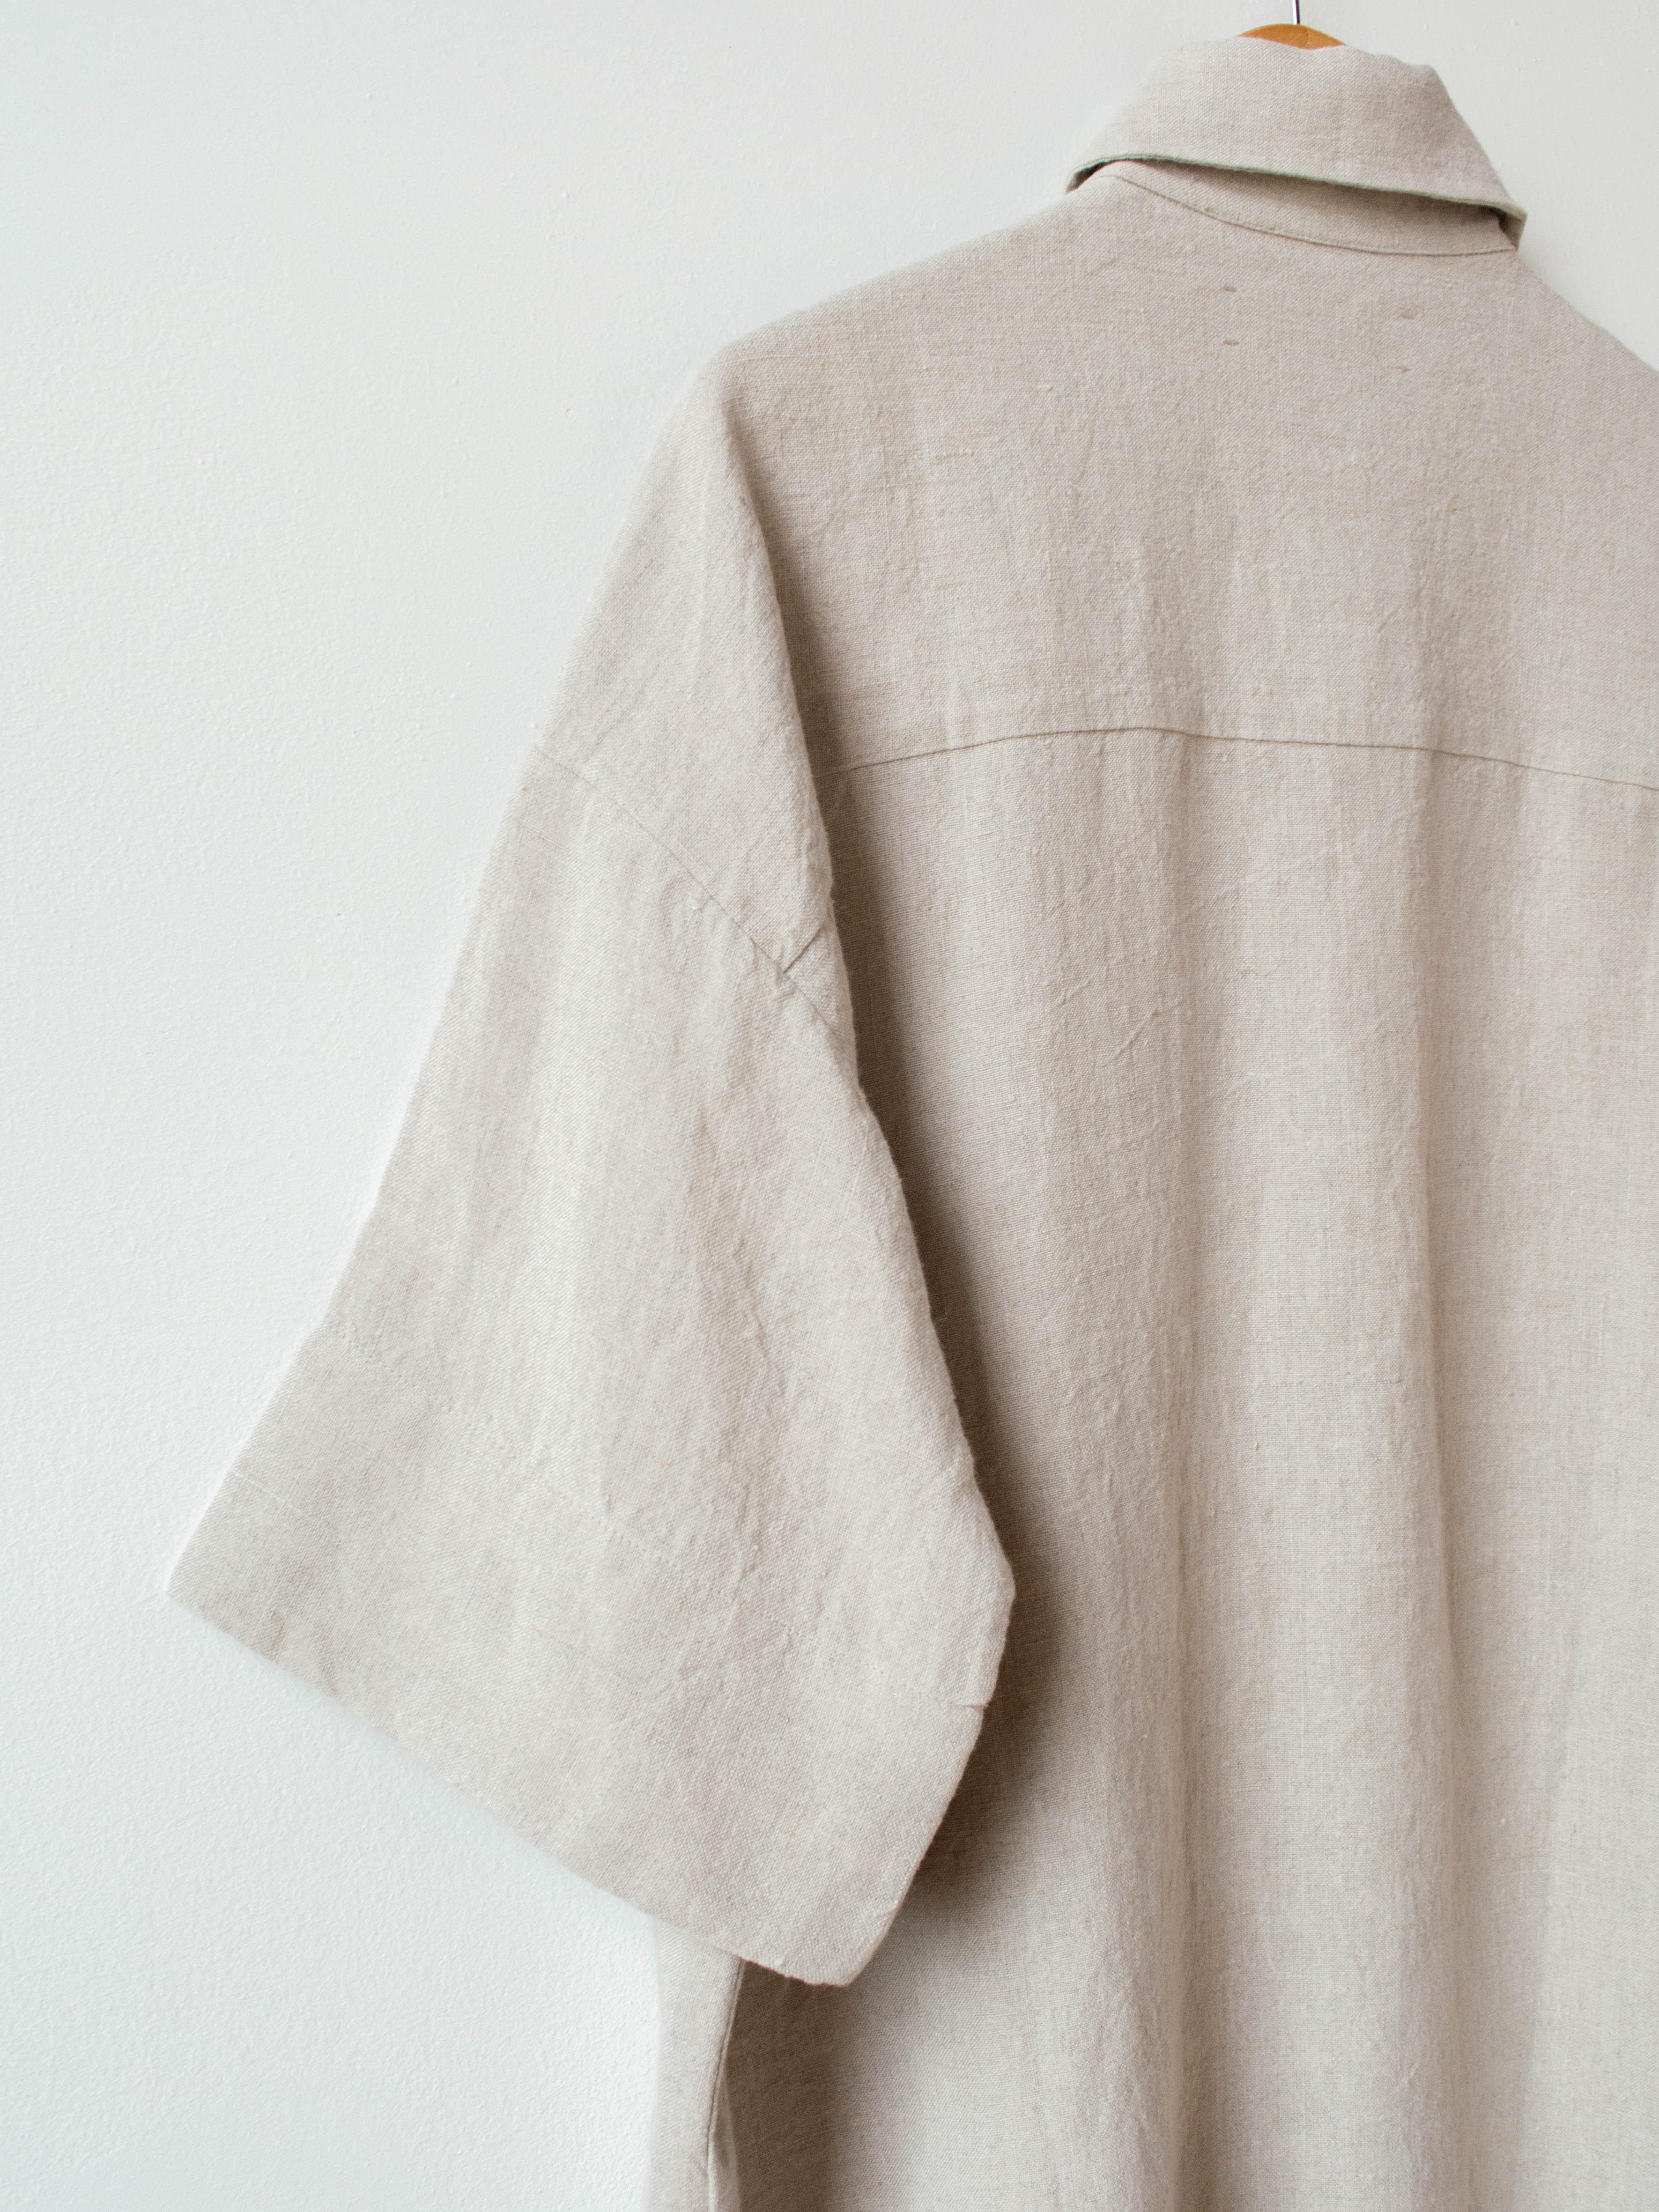 Namu Shop - Jan Machenhauer Ramo Shirt - Natural Linen